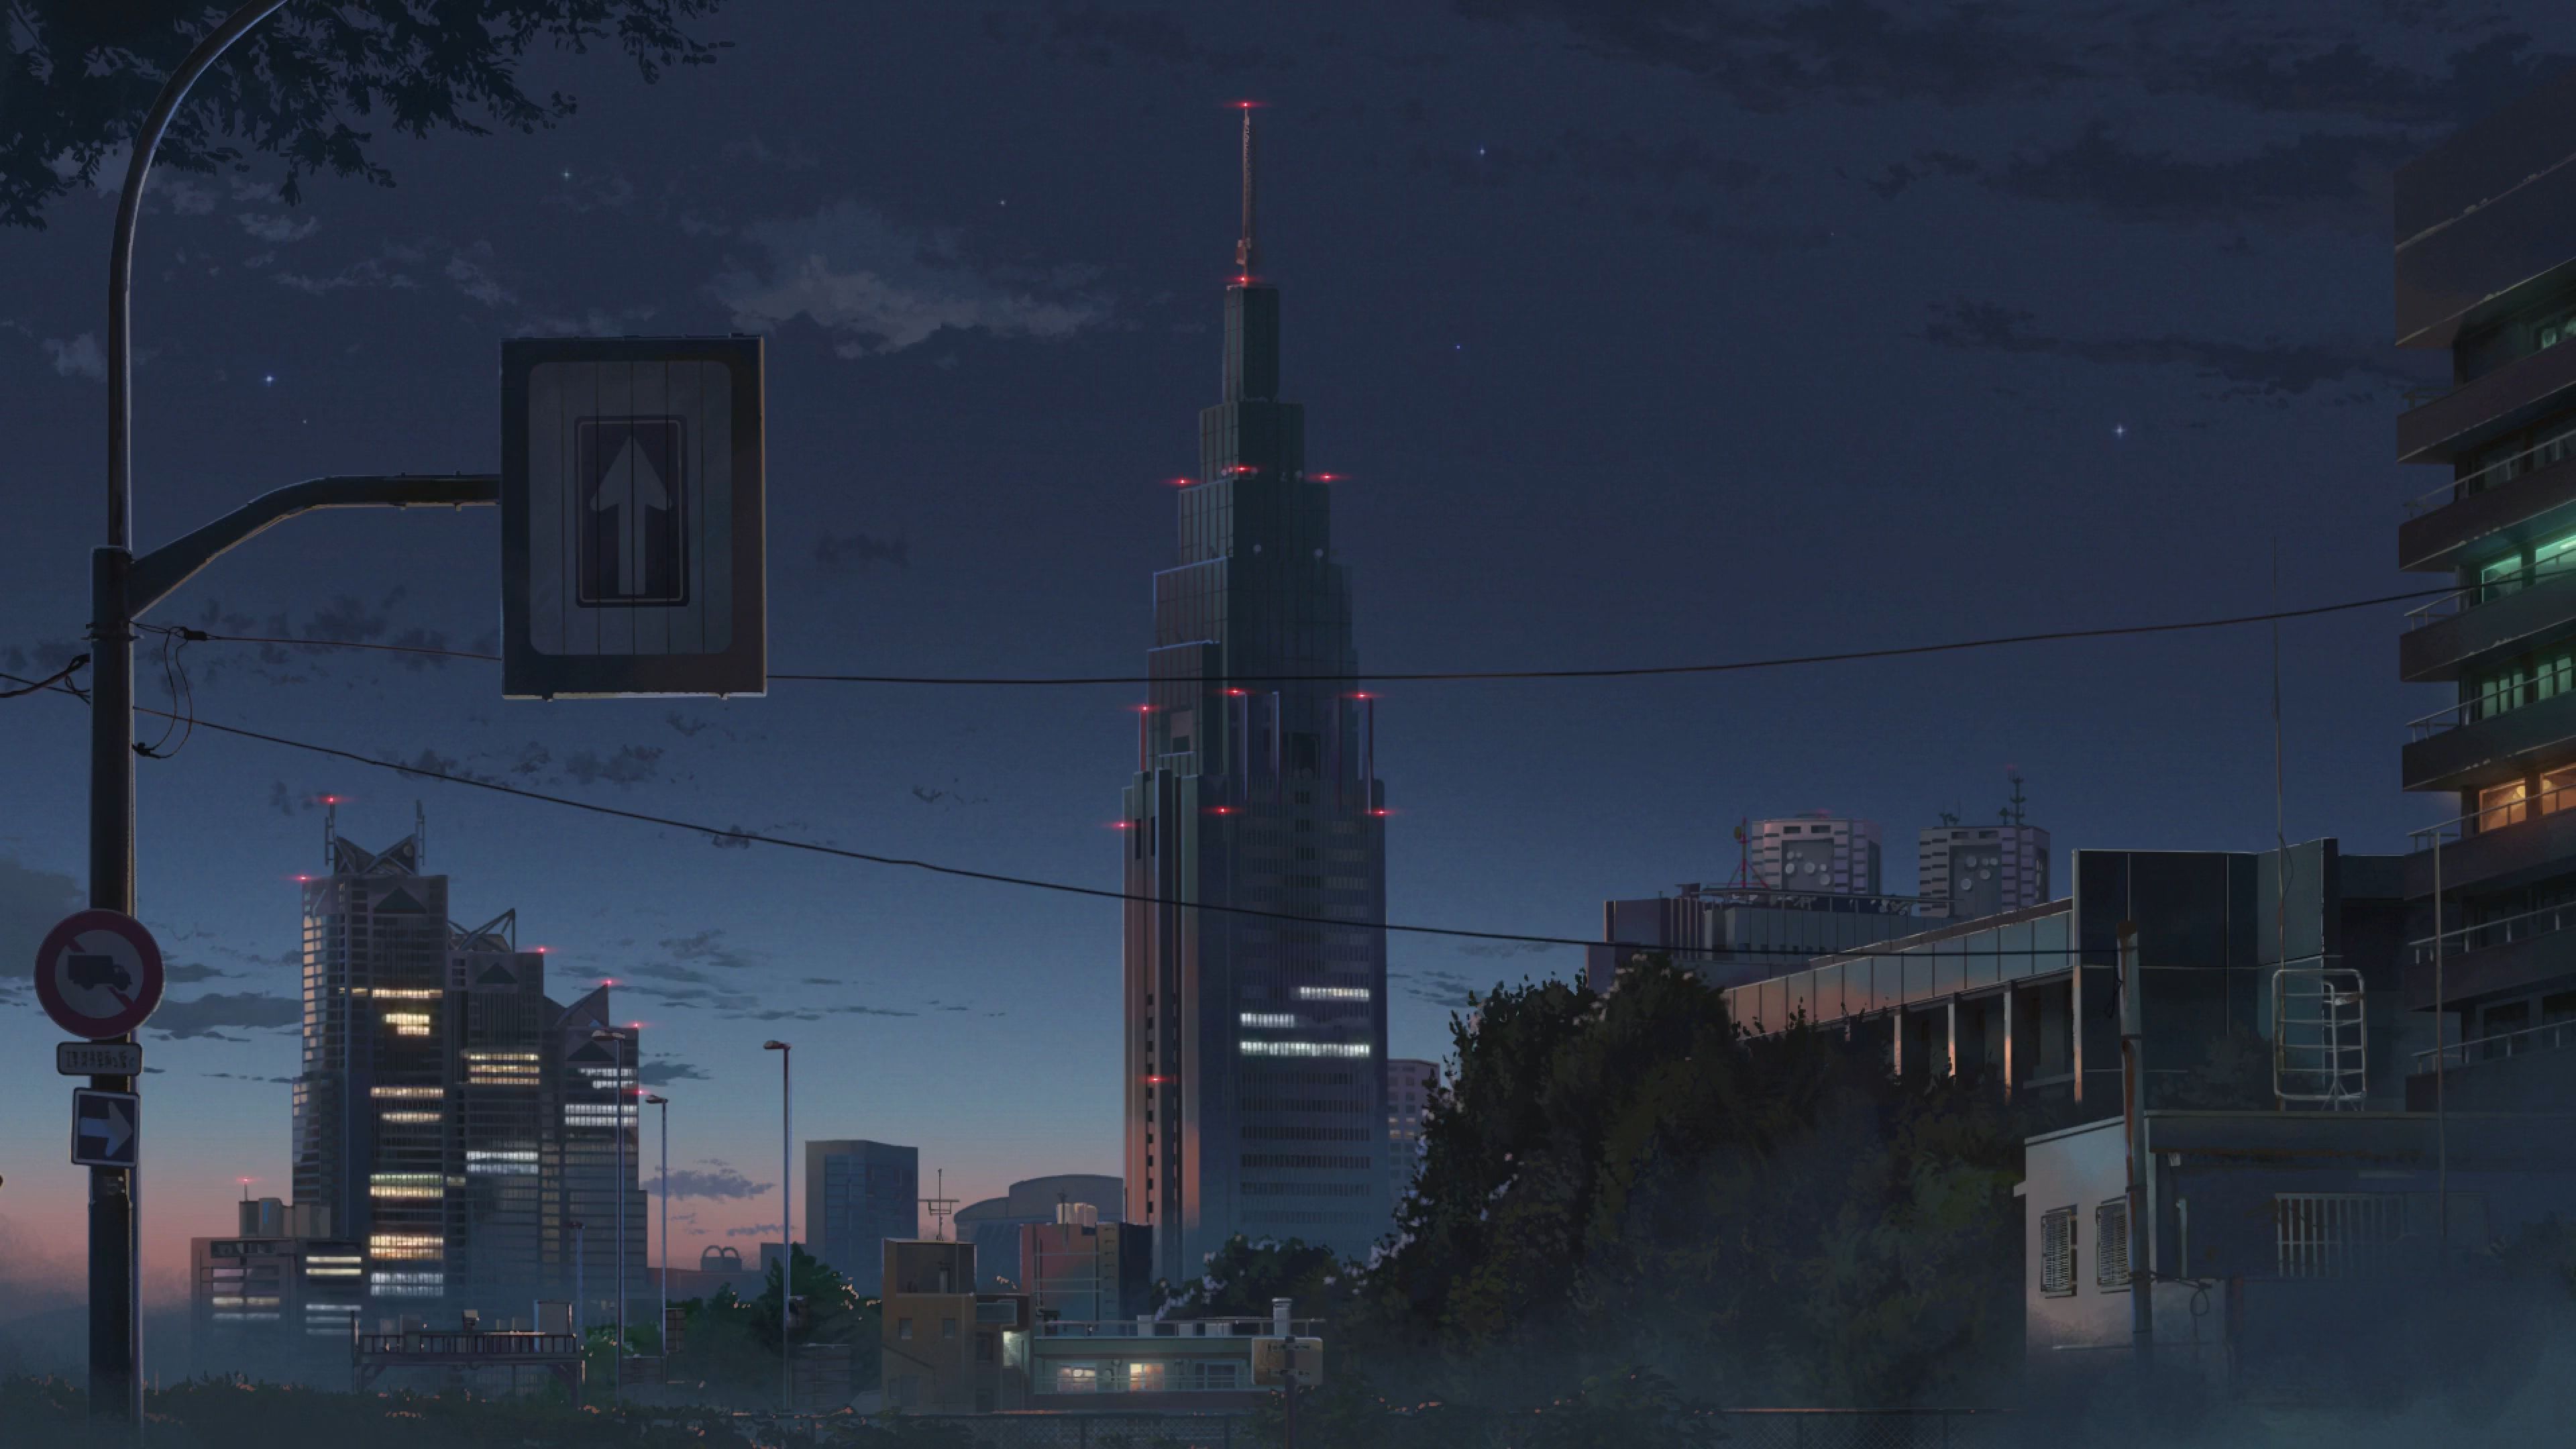 Kimi No Na Wa Anime City 4K Wallpaper, HD Anime 4K Wallpaper, Image, Photo and Background